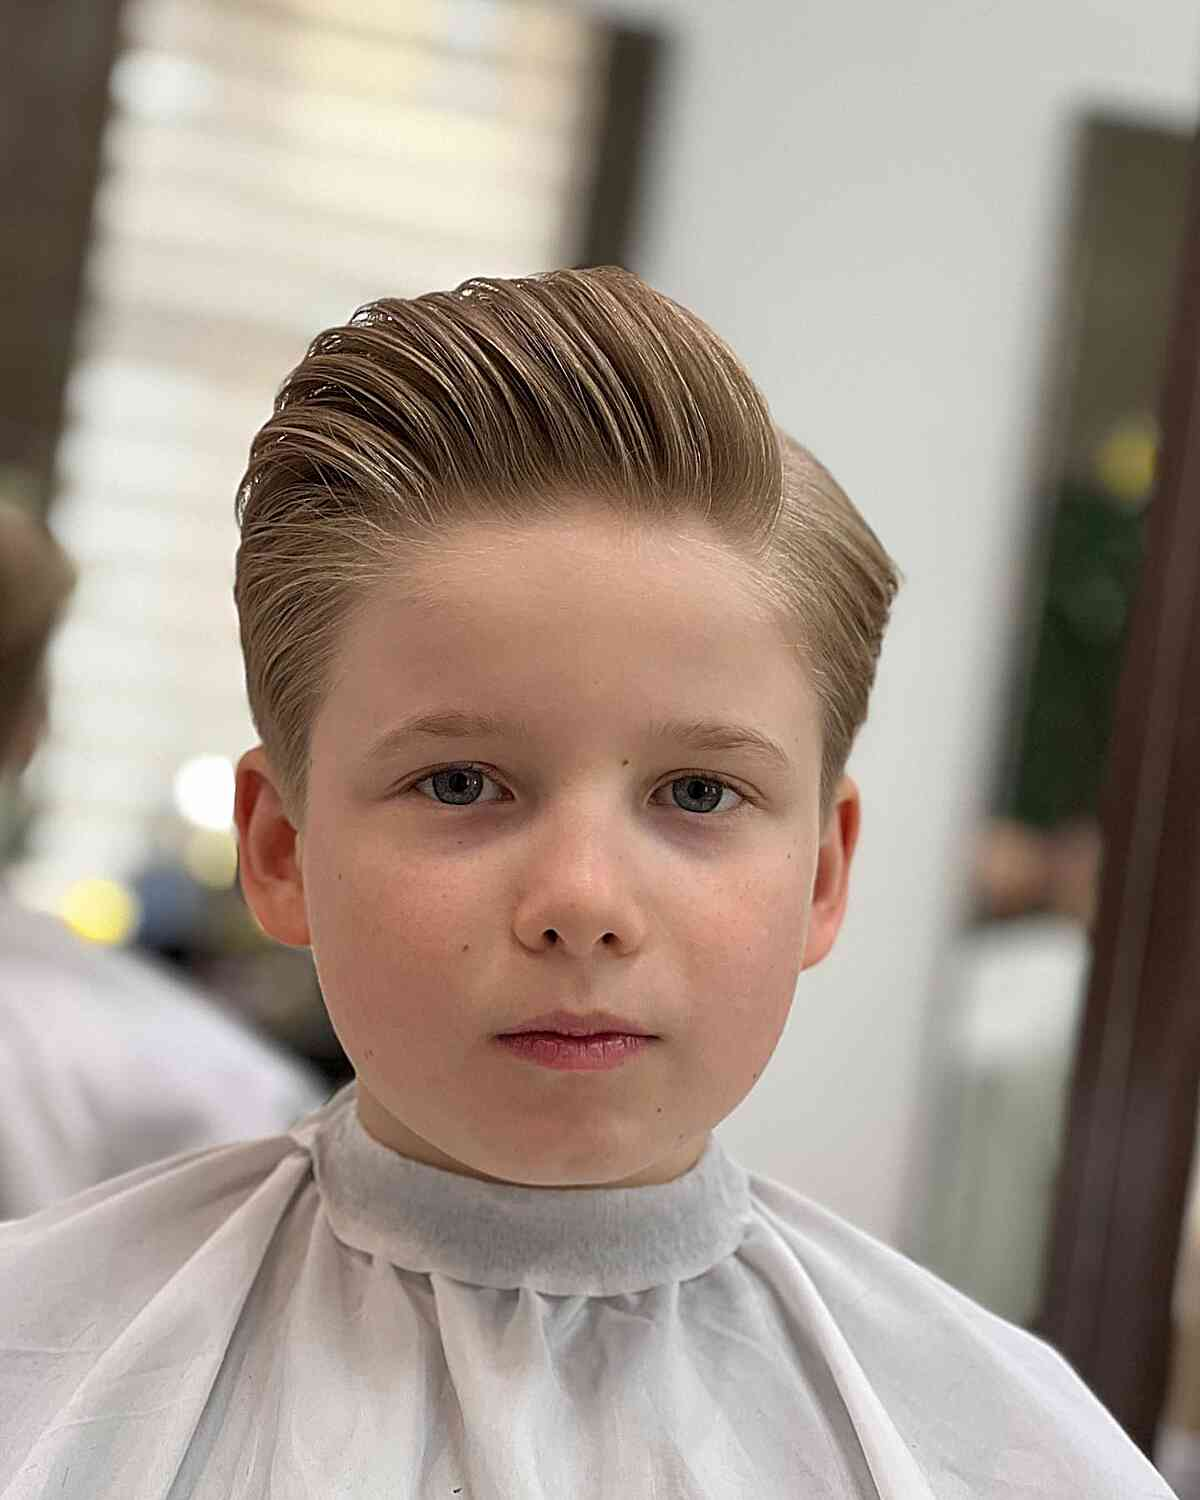 Boys haircut: Picture showing a boy rocking a nice haircut